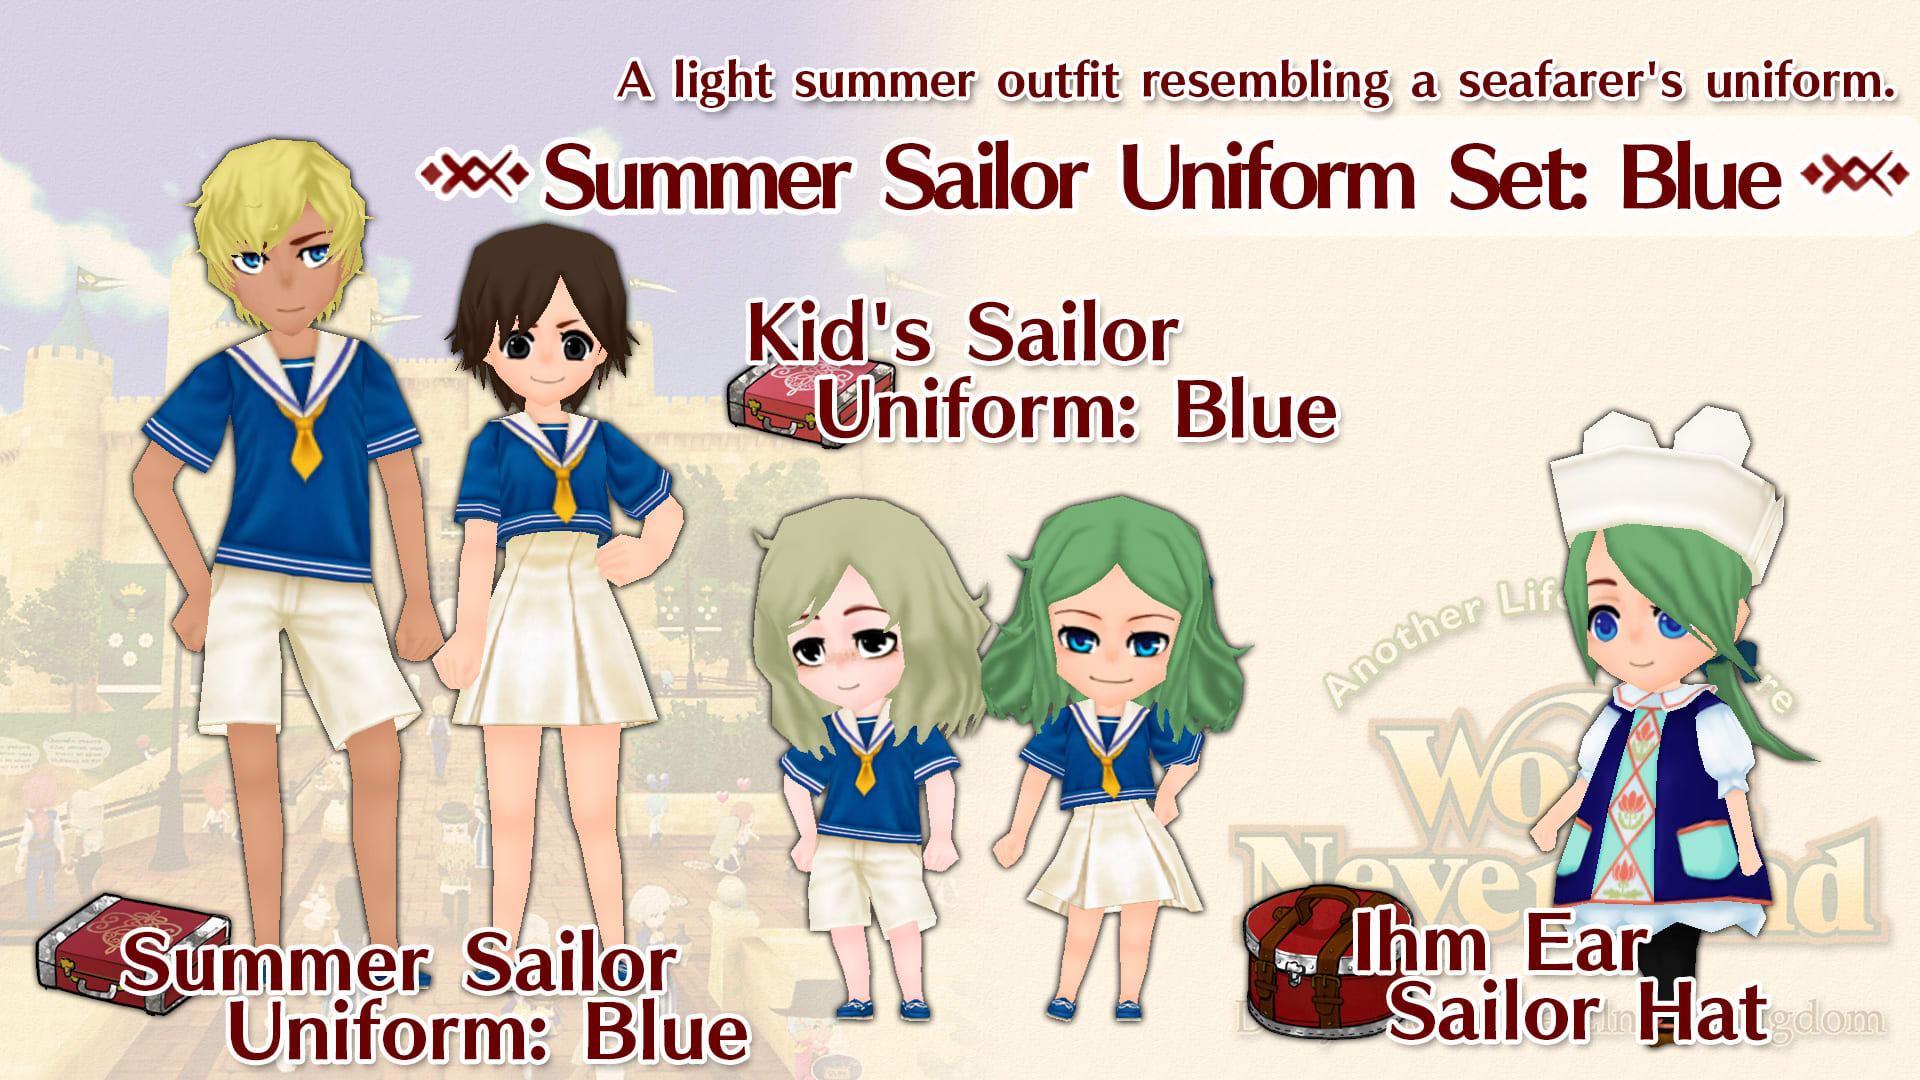 Summer Sailor Uniform Set: Blue